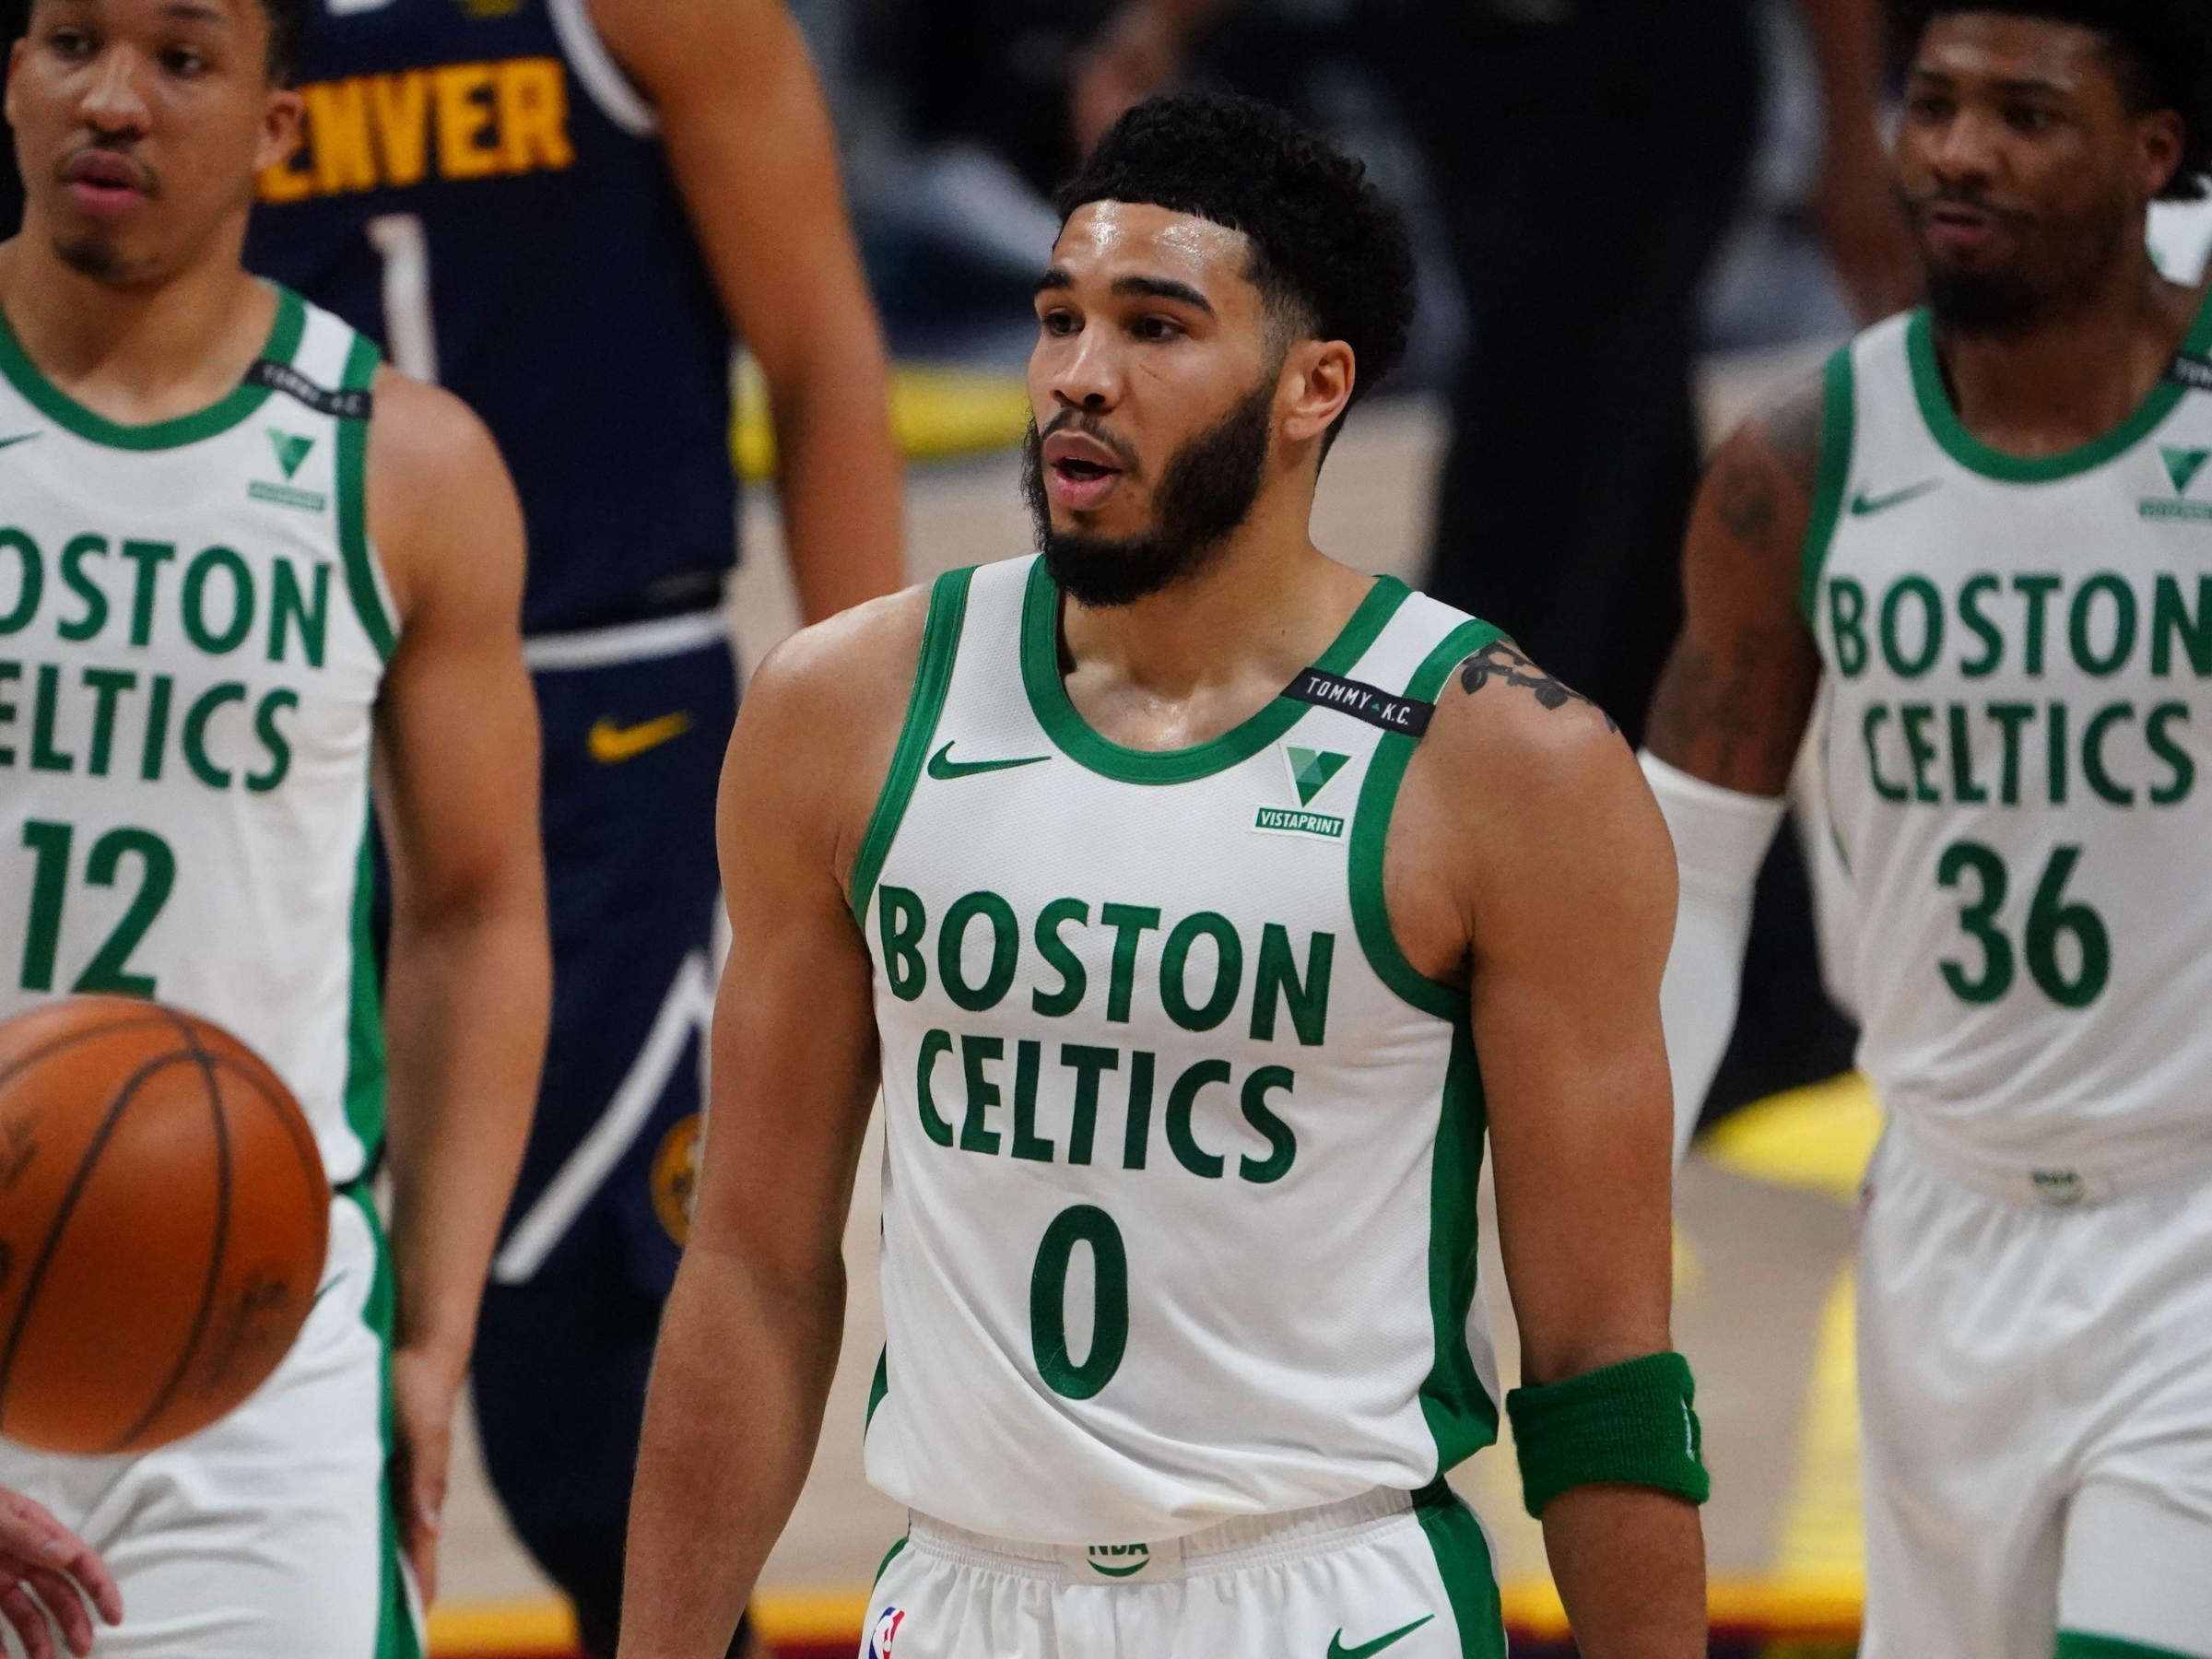 The Boston Celtics (/?s?lt?ks/ SEL-tiks) are an American professional basketball team based in Boston. The Celtics compete in the National Basketball ...